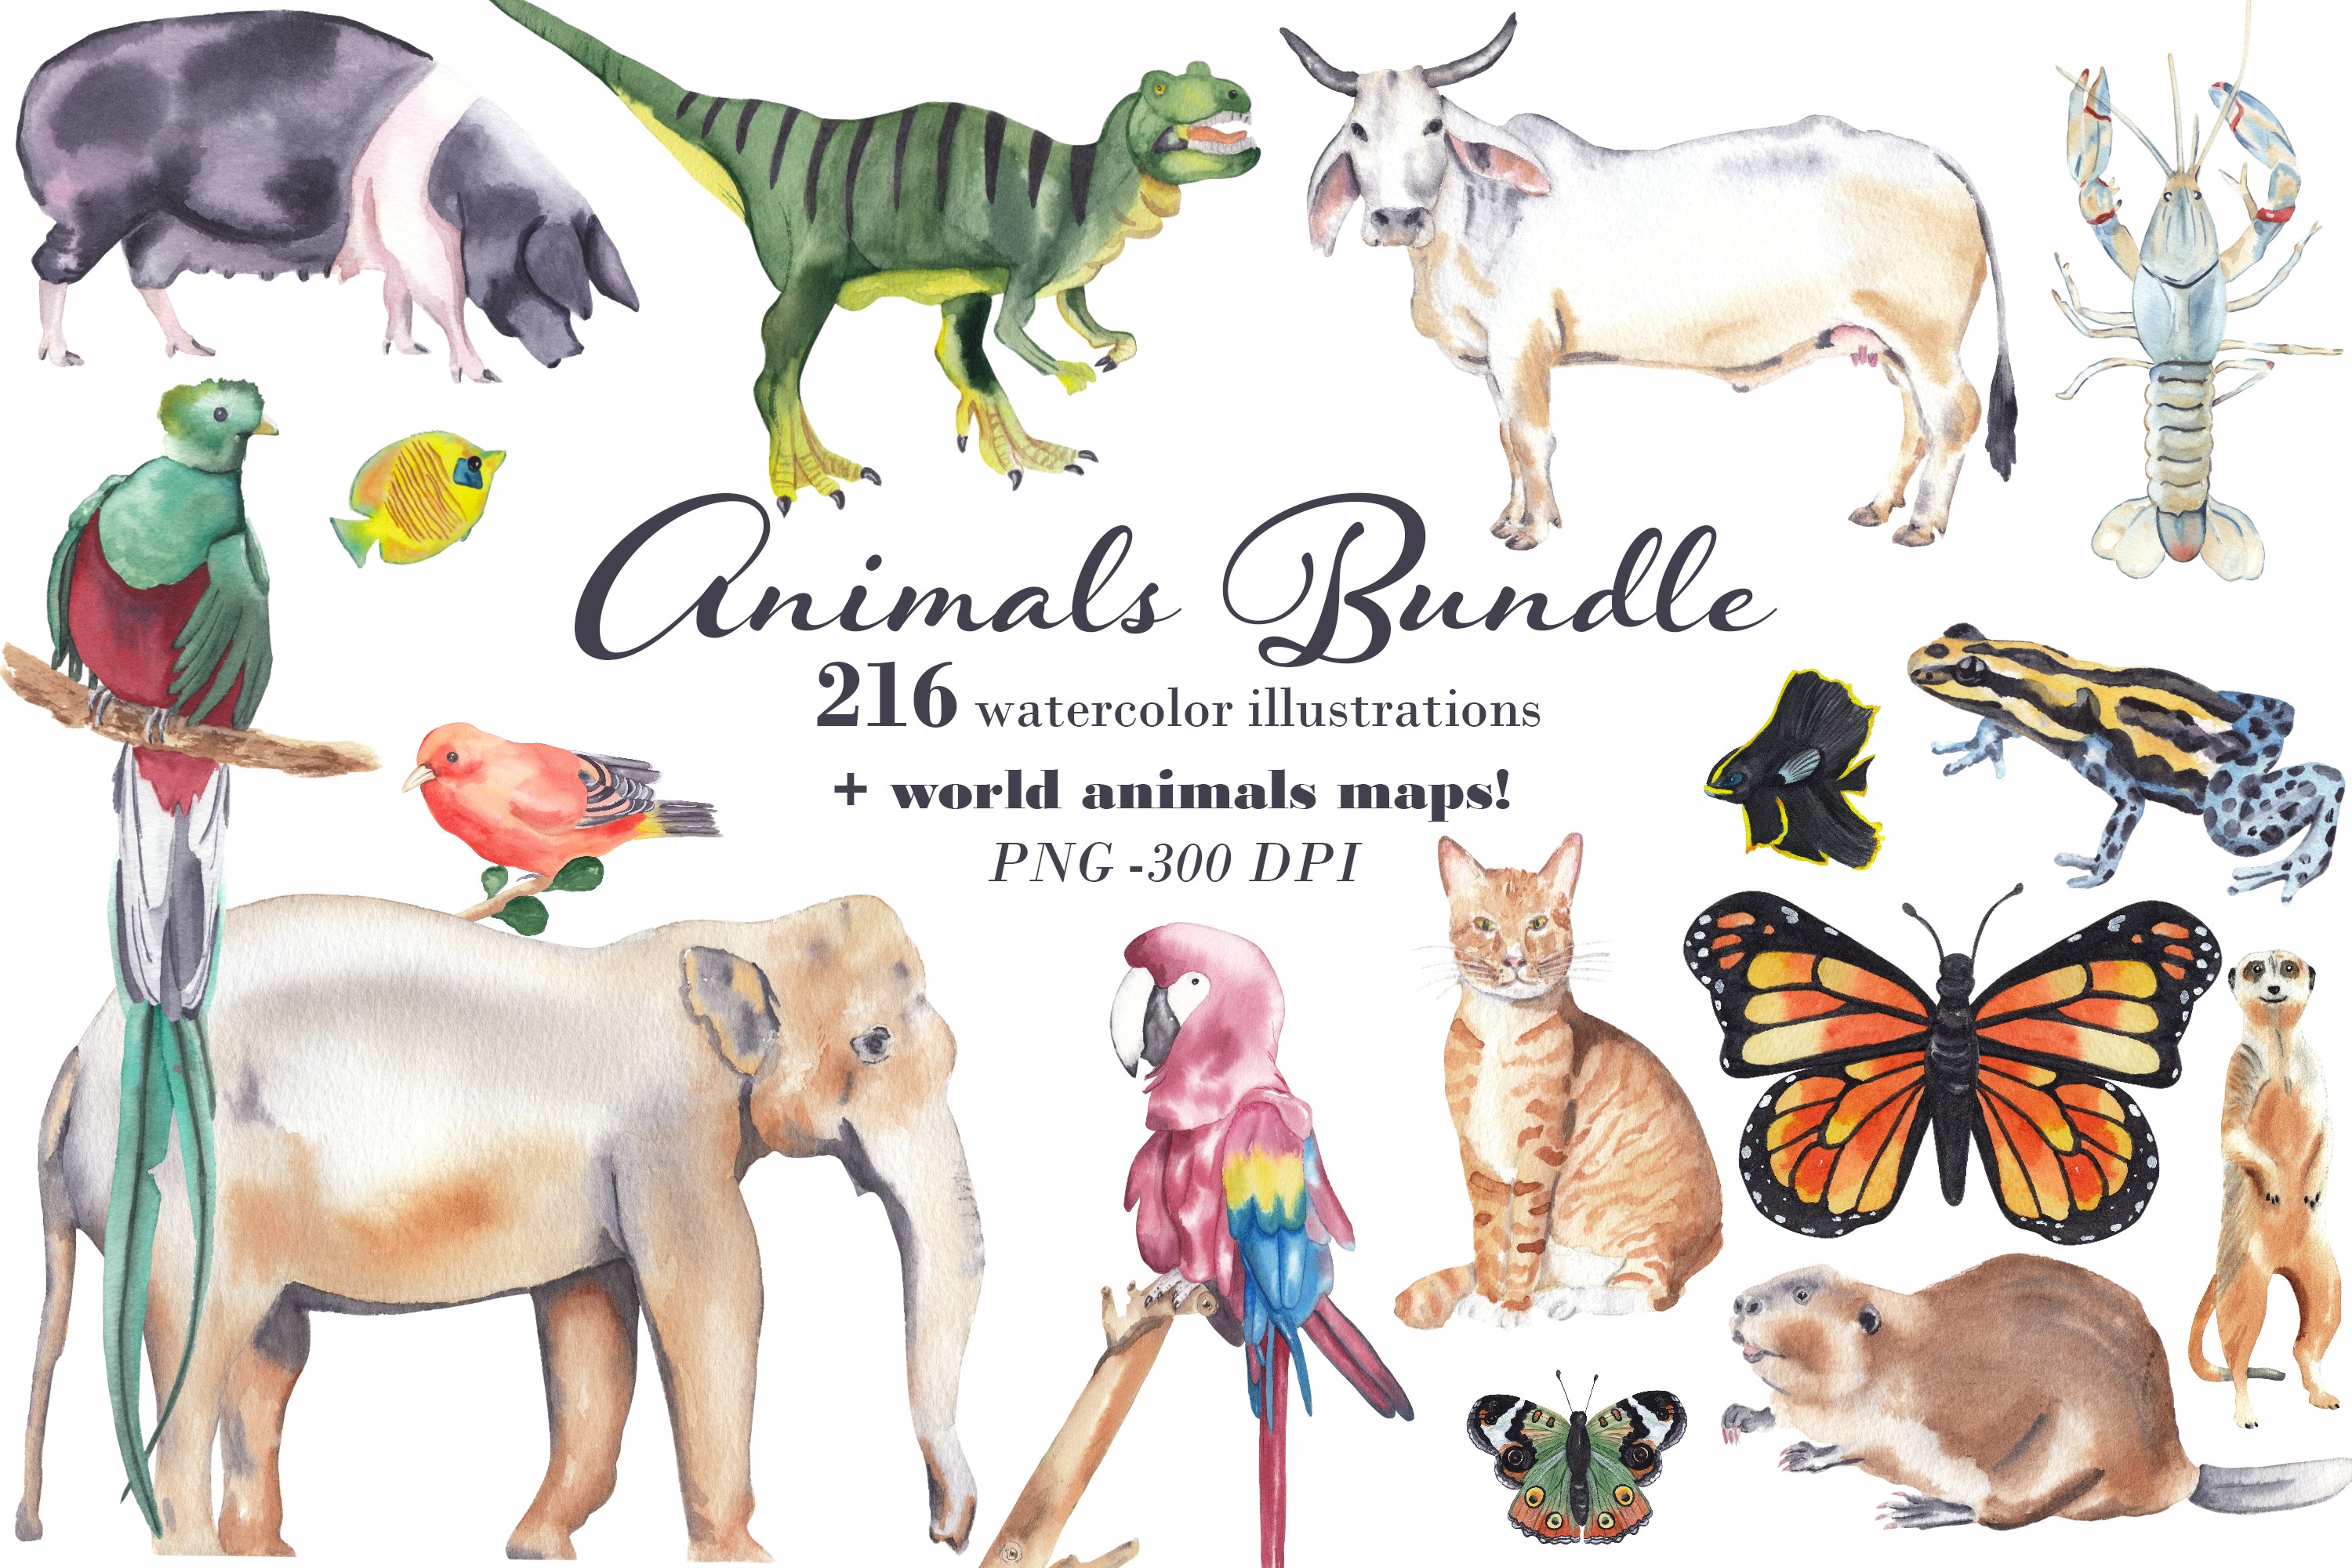 Watercolor Animals Bundle & Maps! cover image.